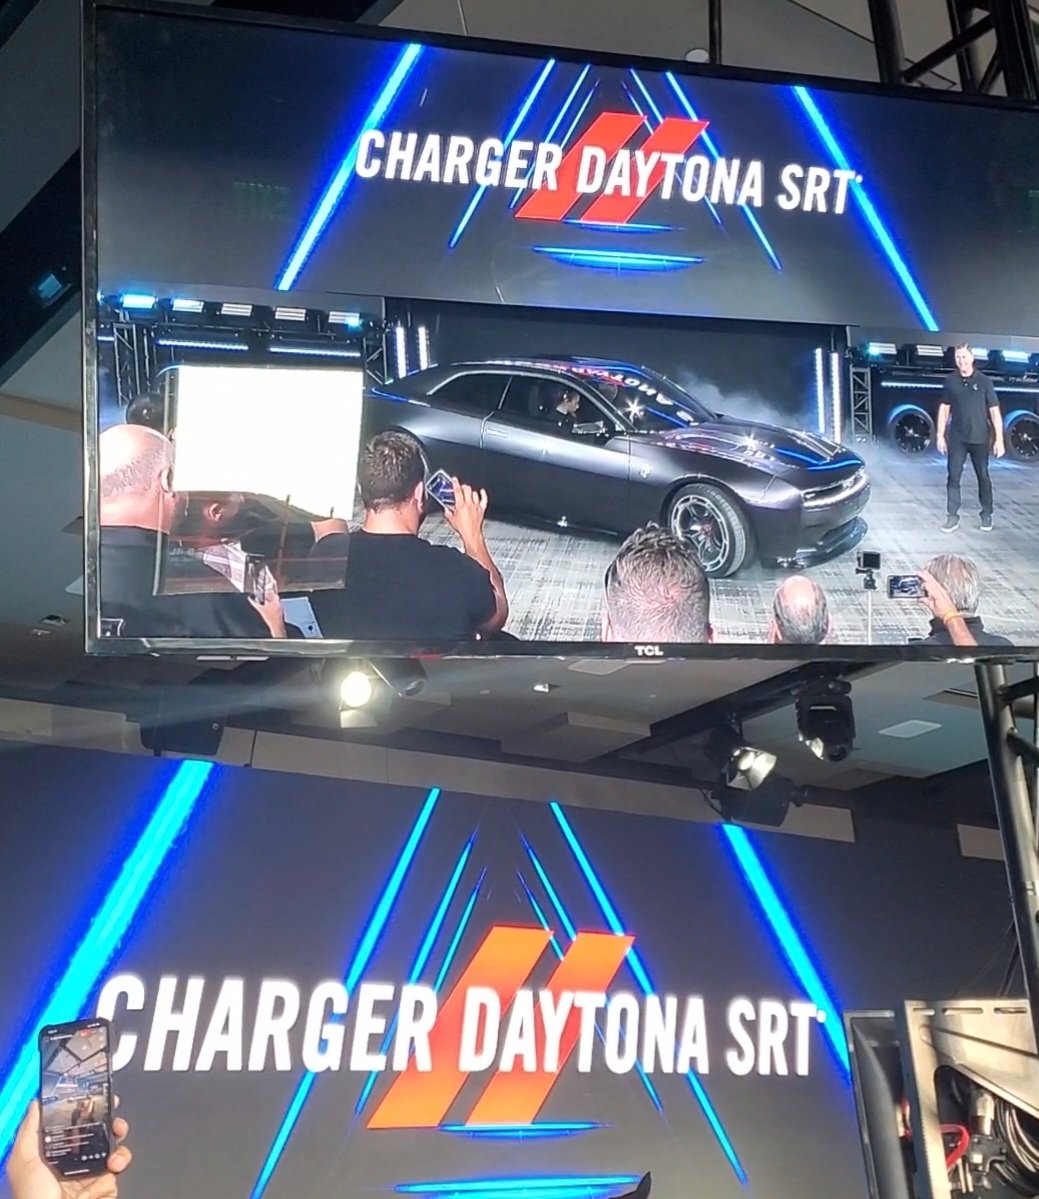 #DodgeSpeedWeek @M1Concourse 
Introducing The Dodge Charger Daytona SRT